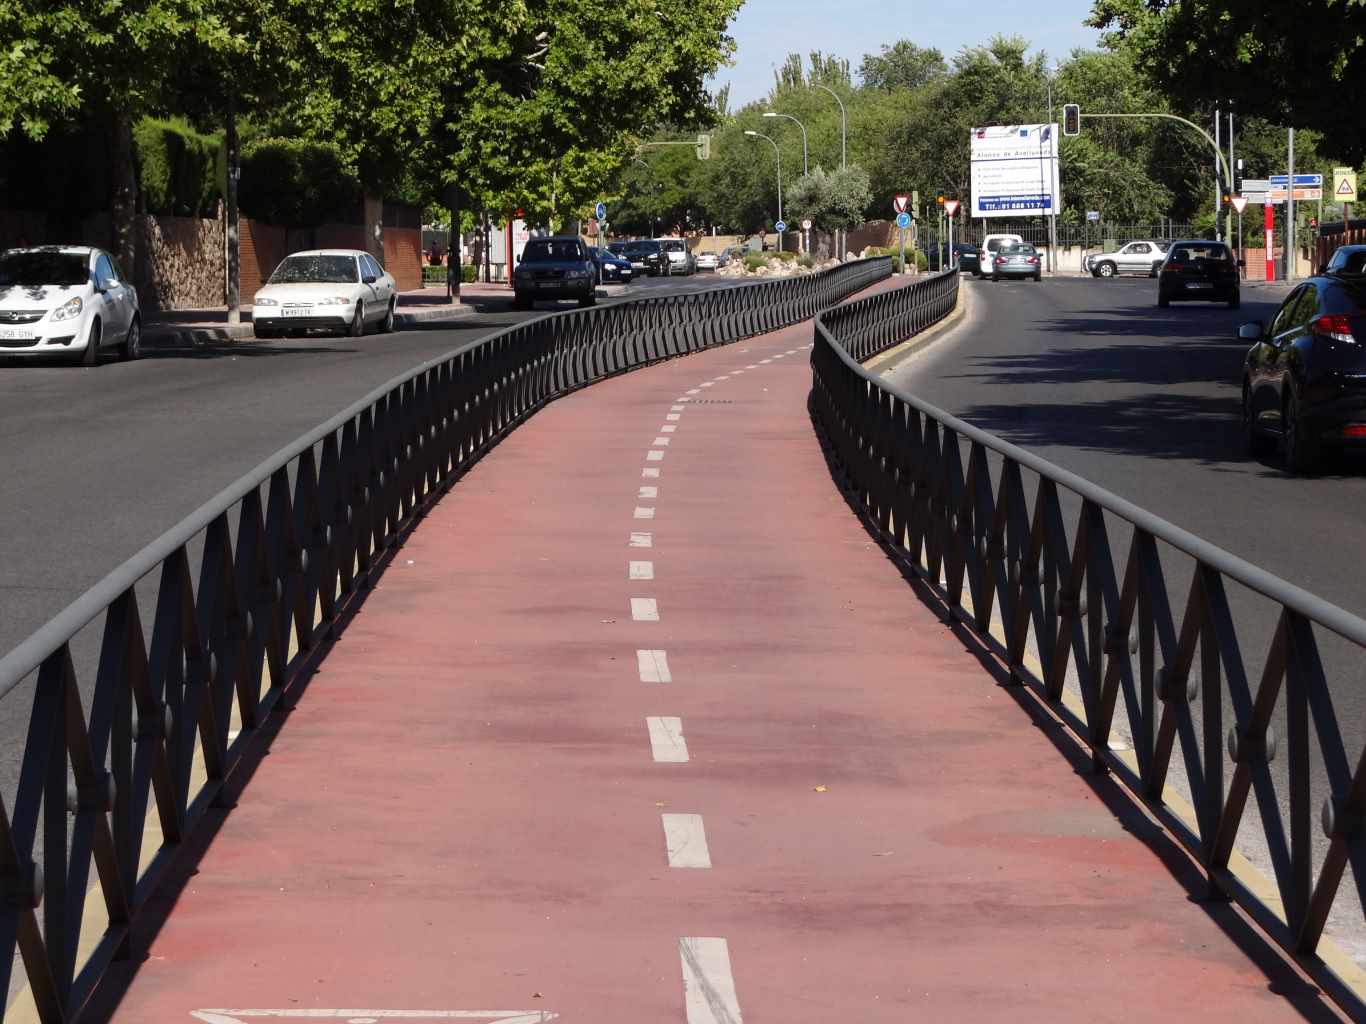 El Carril Bici de Alcalá de - Dream Alcalá